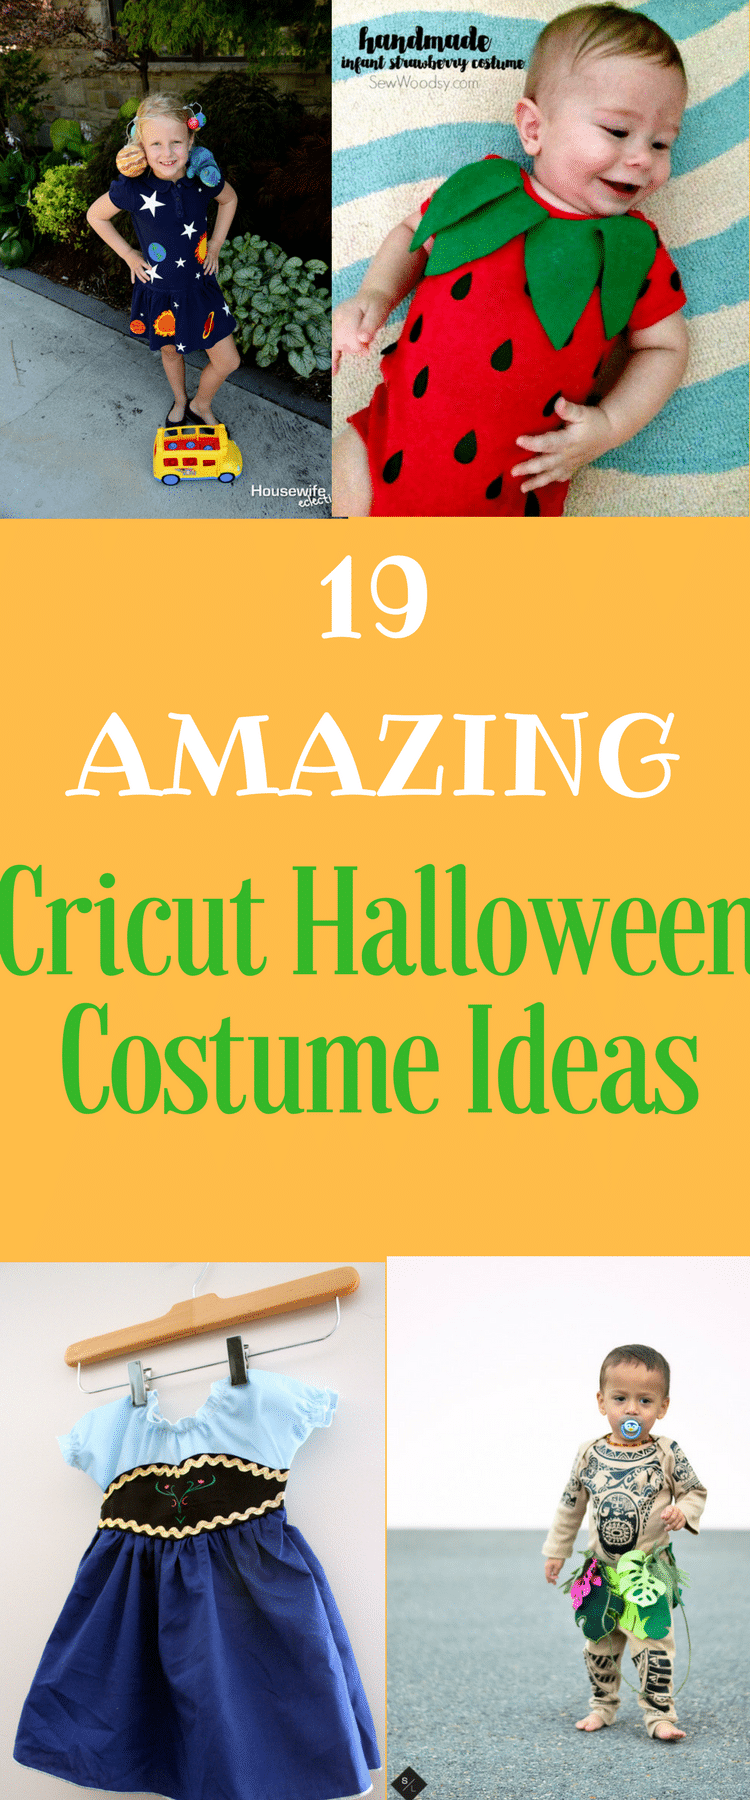 Cricut Halloween Costumes / DIY Halloween Costumes / Cricut Costume Ideas / Cricut Halloween Ideas / #Cricut #Halloween #DIY